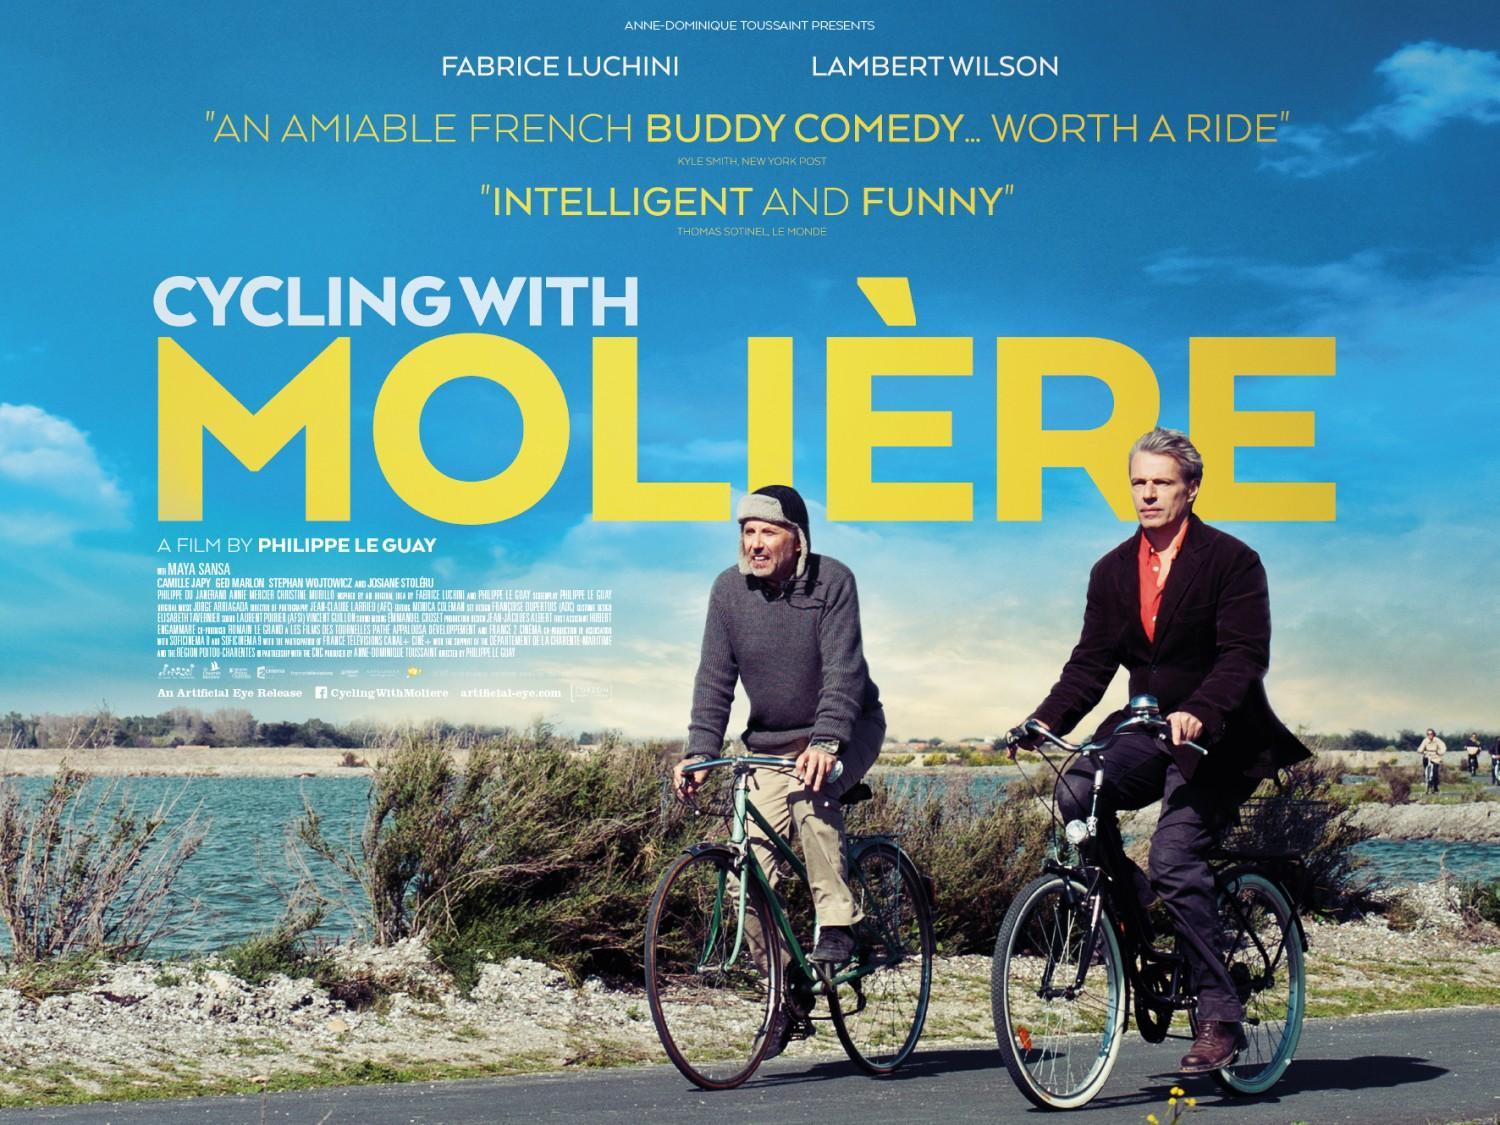 Постер фильма Алцест на велосипеде | Alceste à bicyclette